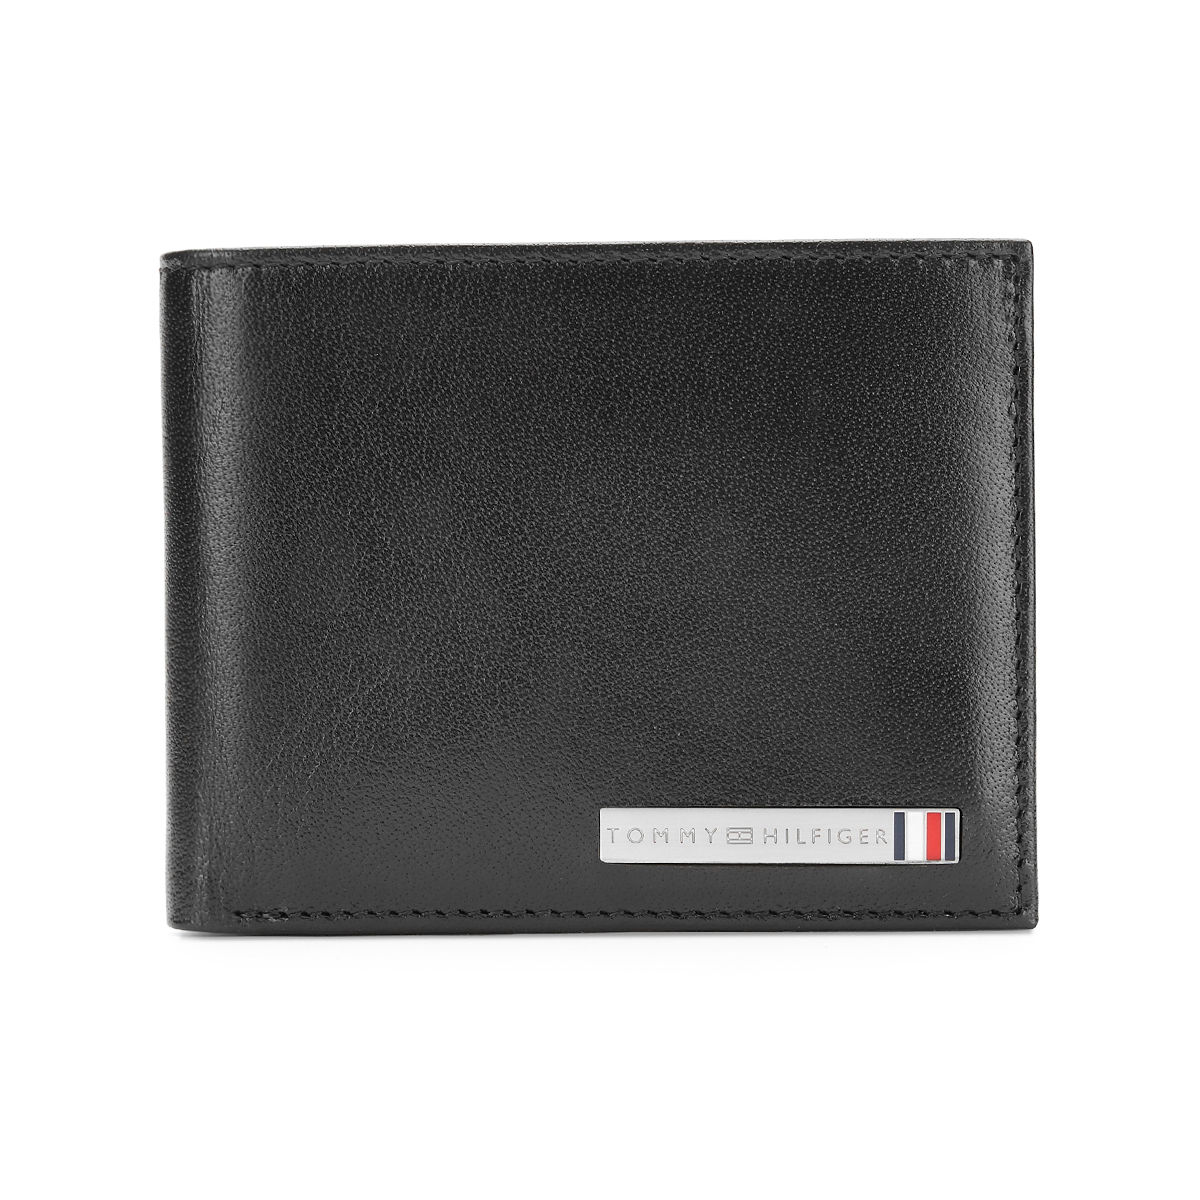 Tommy Hilfiger Accessories Titus Mens Leather Passcase Wallet Black